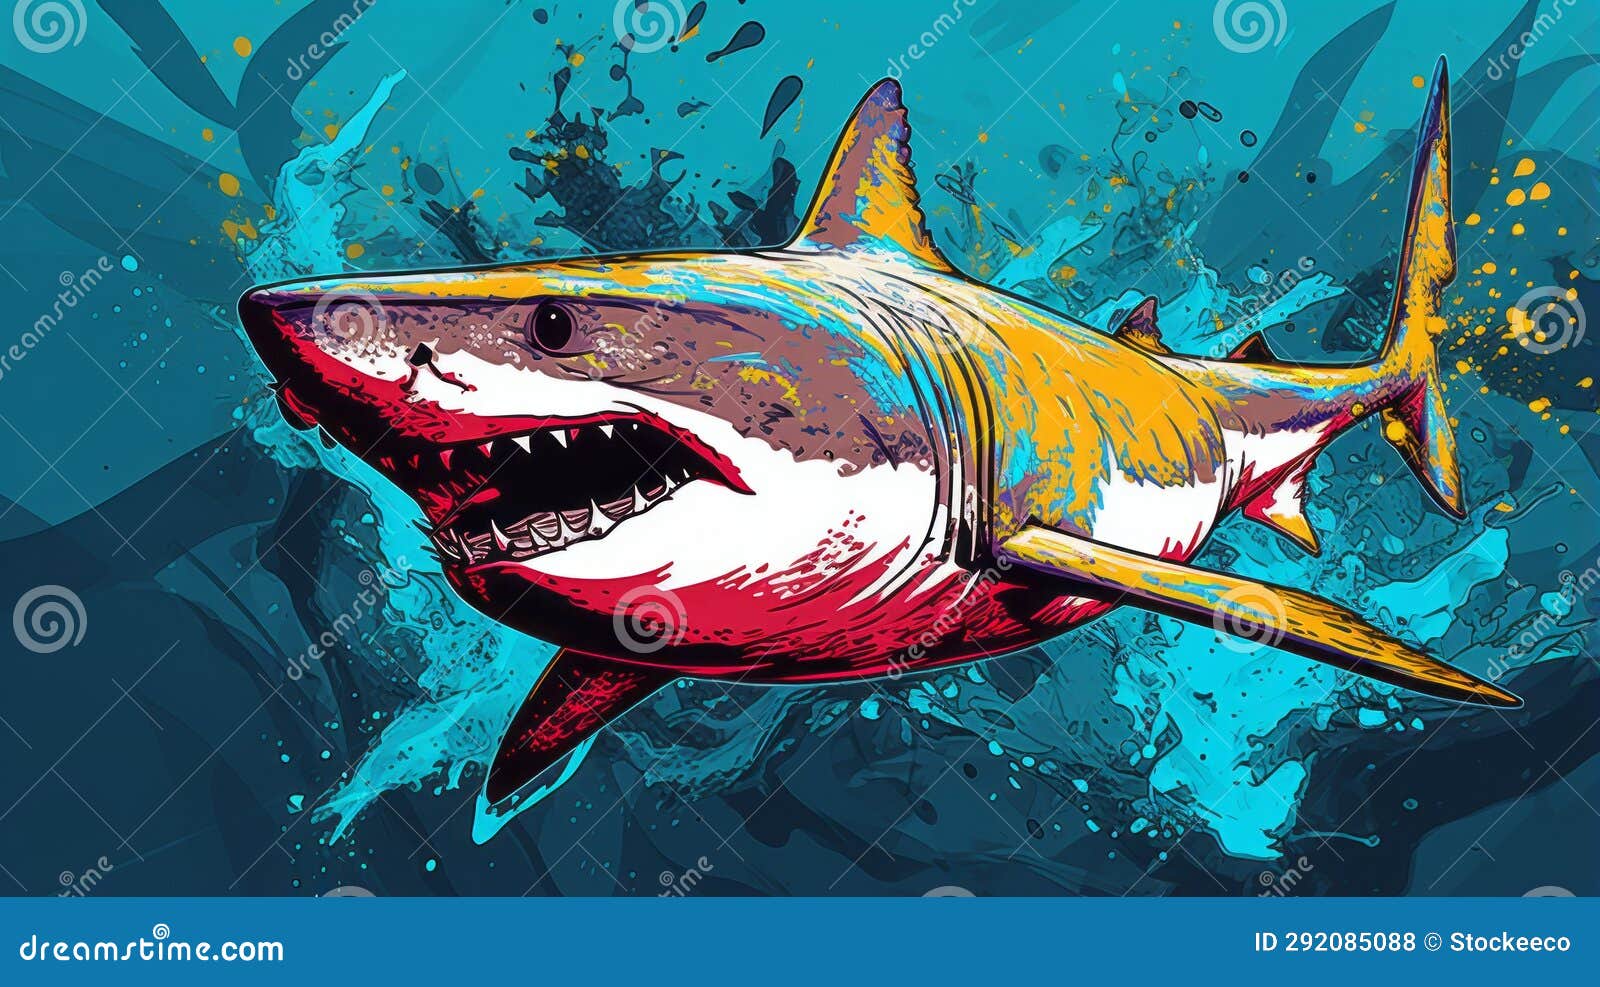 Colorful Pop Art Shark Painting: Algeapunk, Bombacore, Wetcore Graphic ...